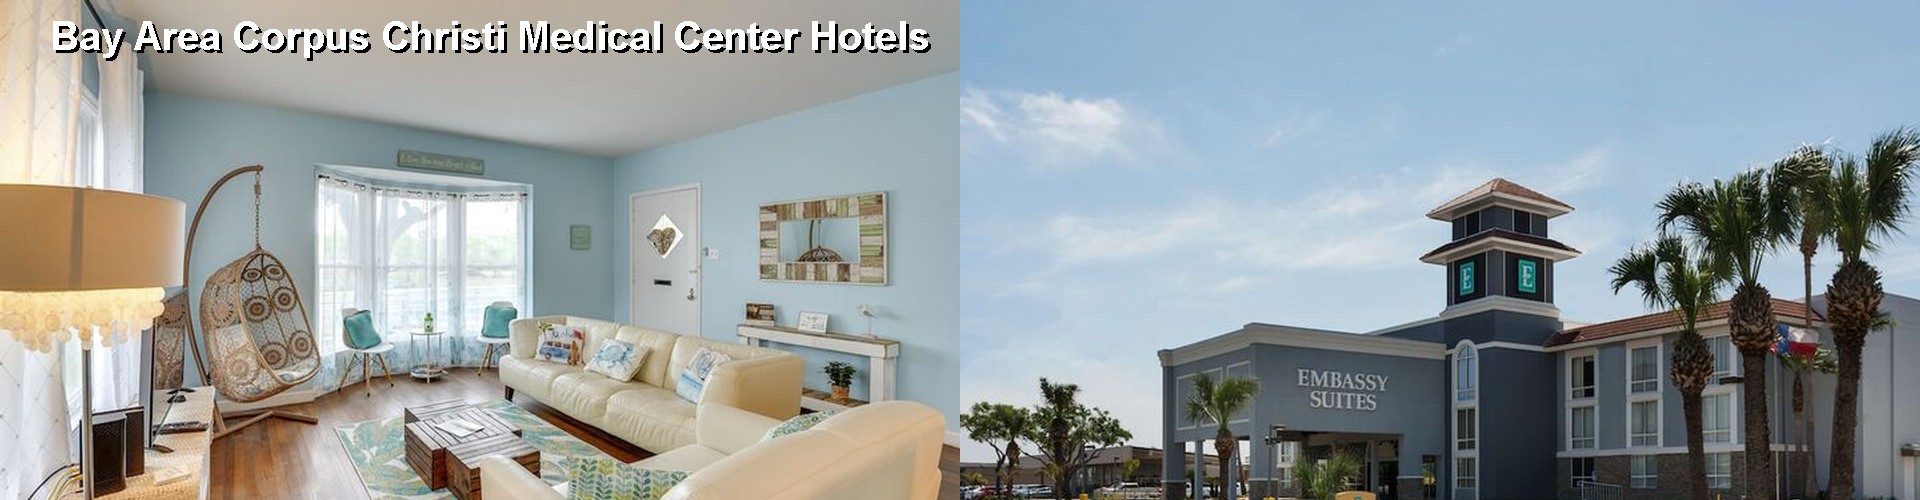 5 Best Hotels near Bay Area Corpus Christi Medical Center